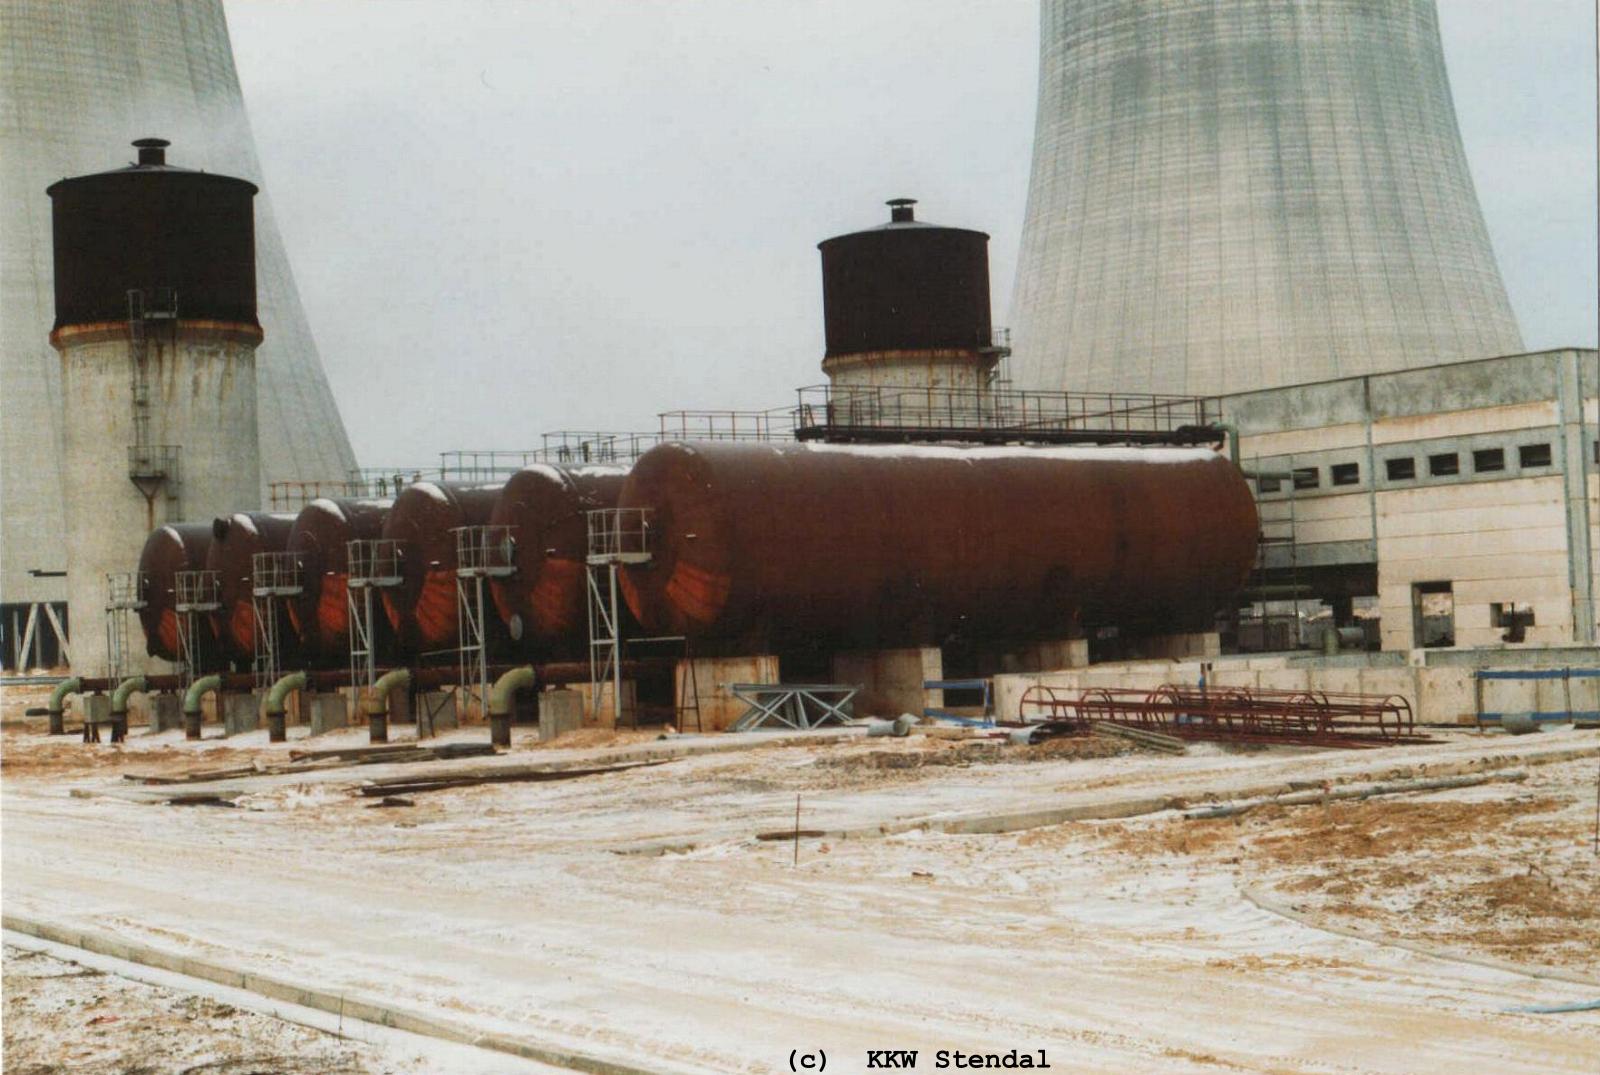  KKW Stendal, Baustelle 1990, KTZWA Kühlturmzusatzwasseraufbereitung 